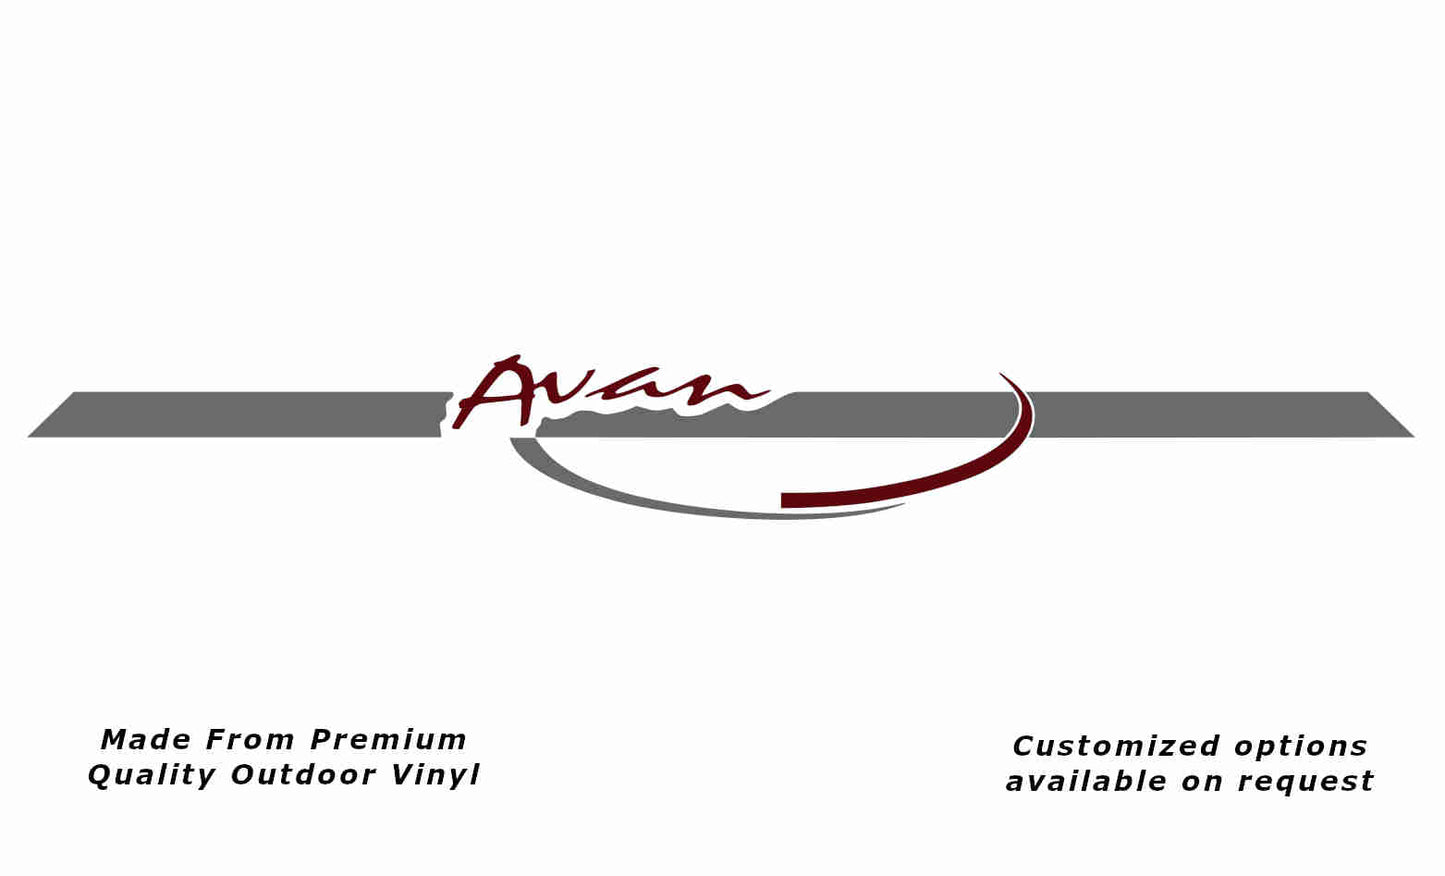 Avan 2004-2011 front caravan replacement vinyl decal sticker in silver grey and purple red.